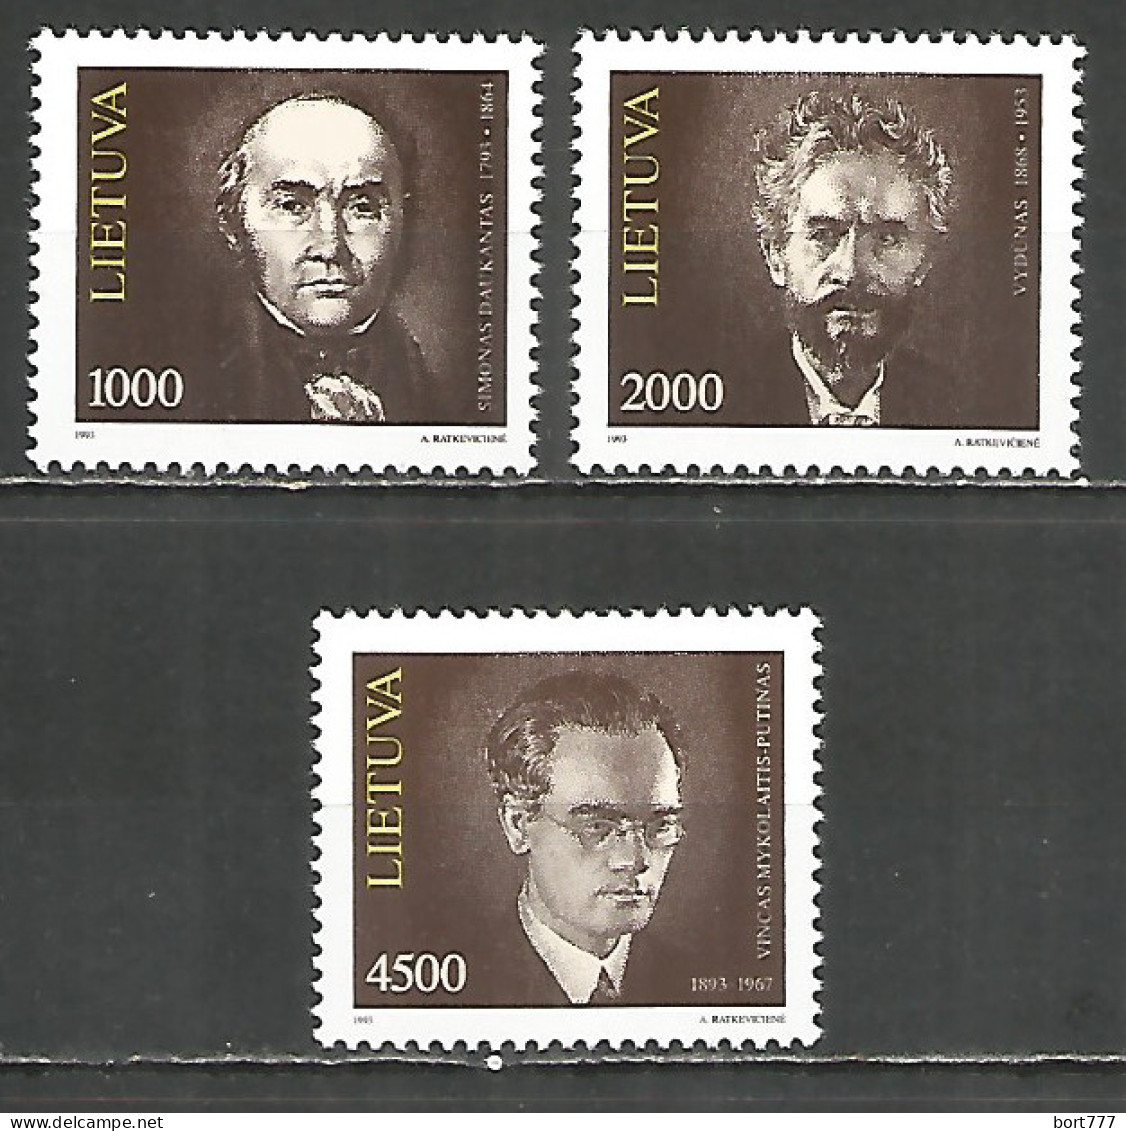 Lithuania 1993 Mint Stamps MNH (**)  - Litauen